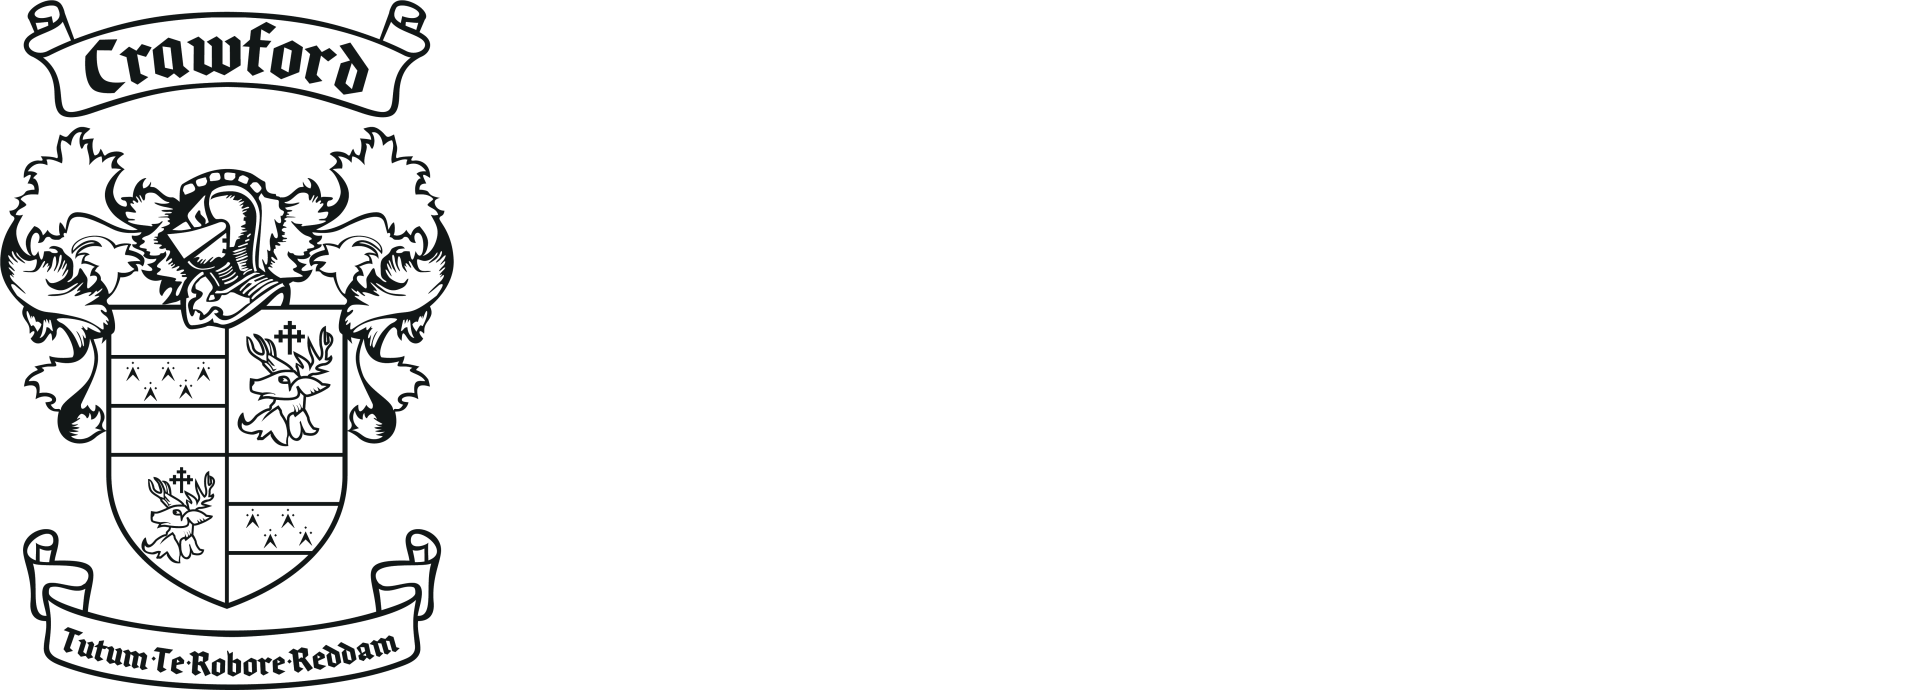 crawfordbadge